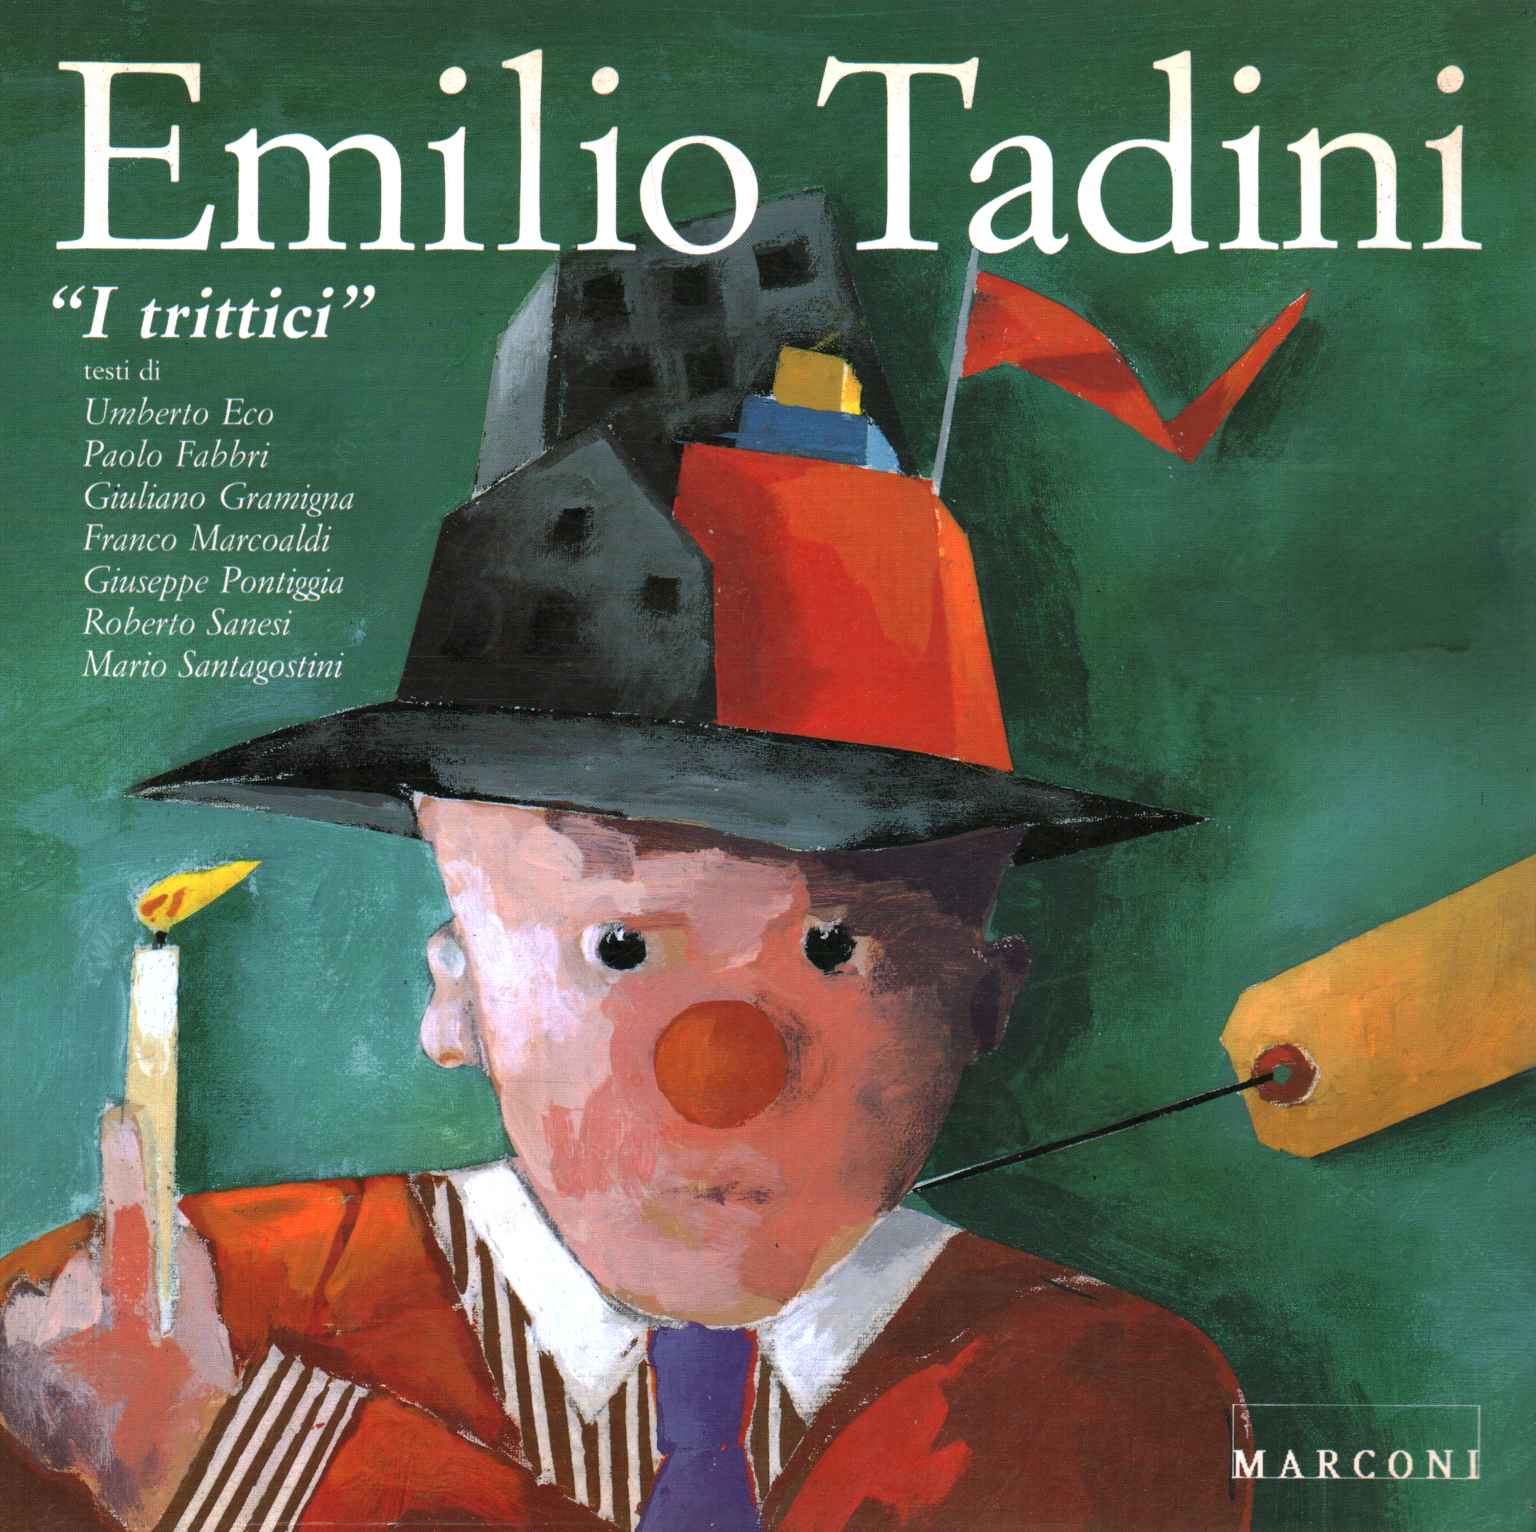 Emilio Tadini. The triptychs